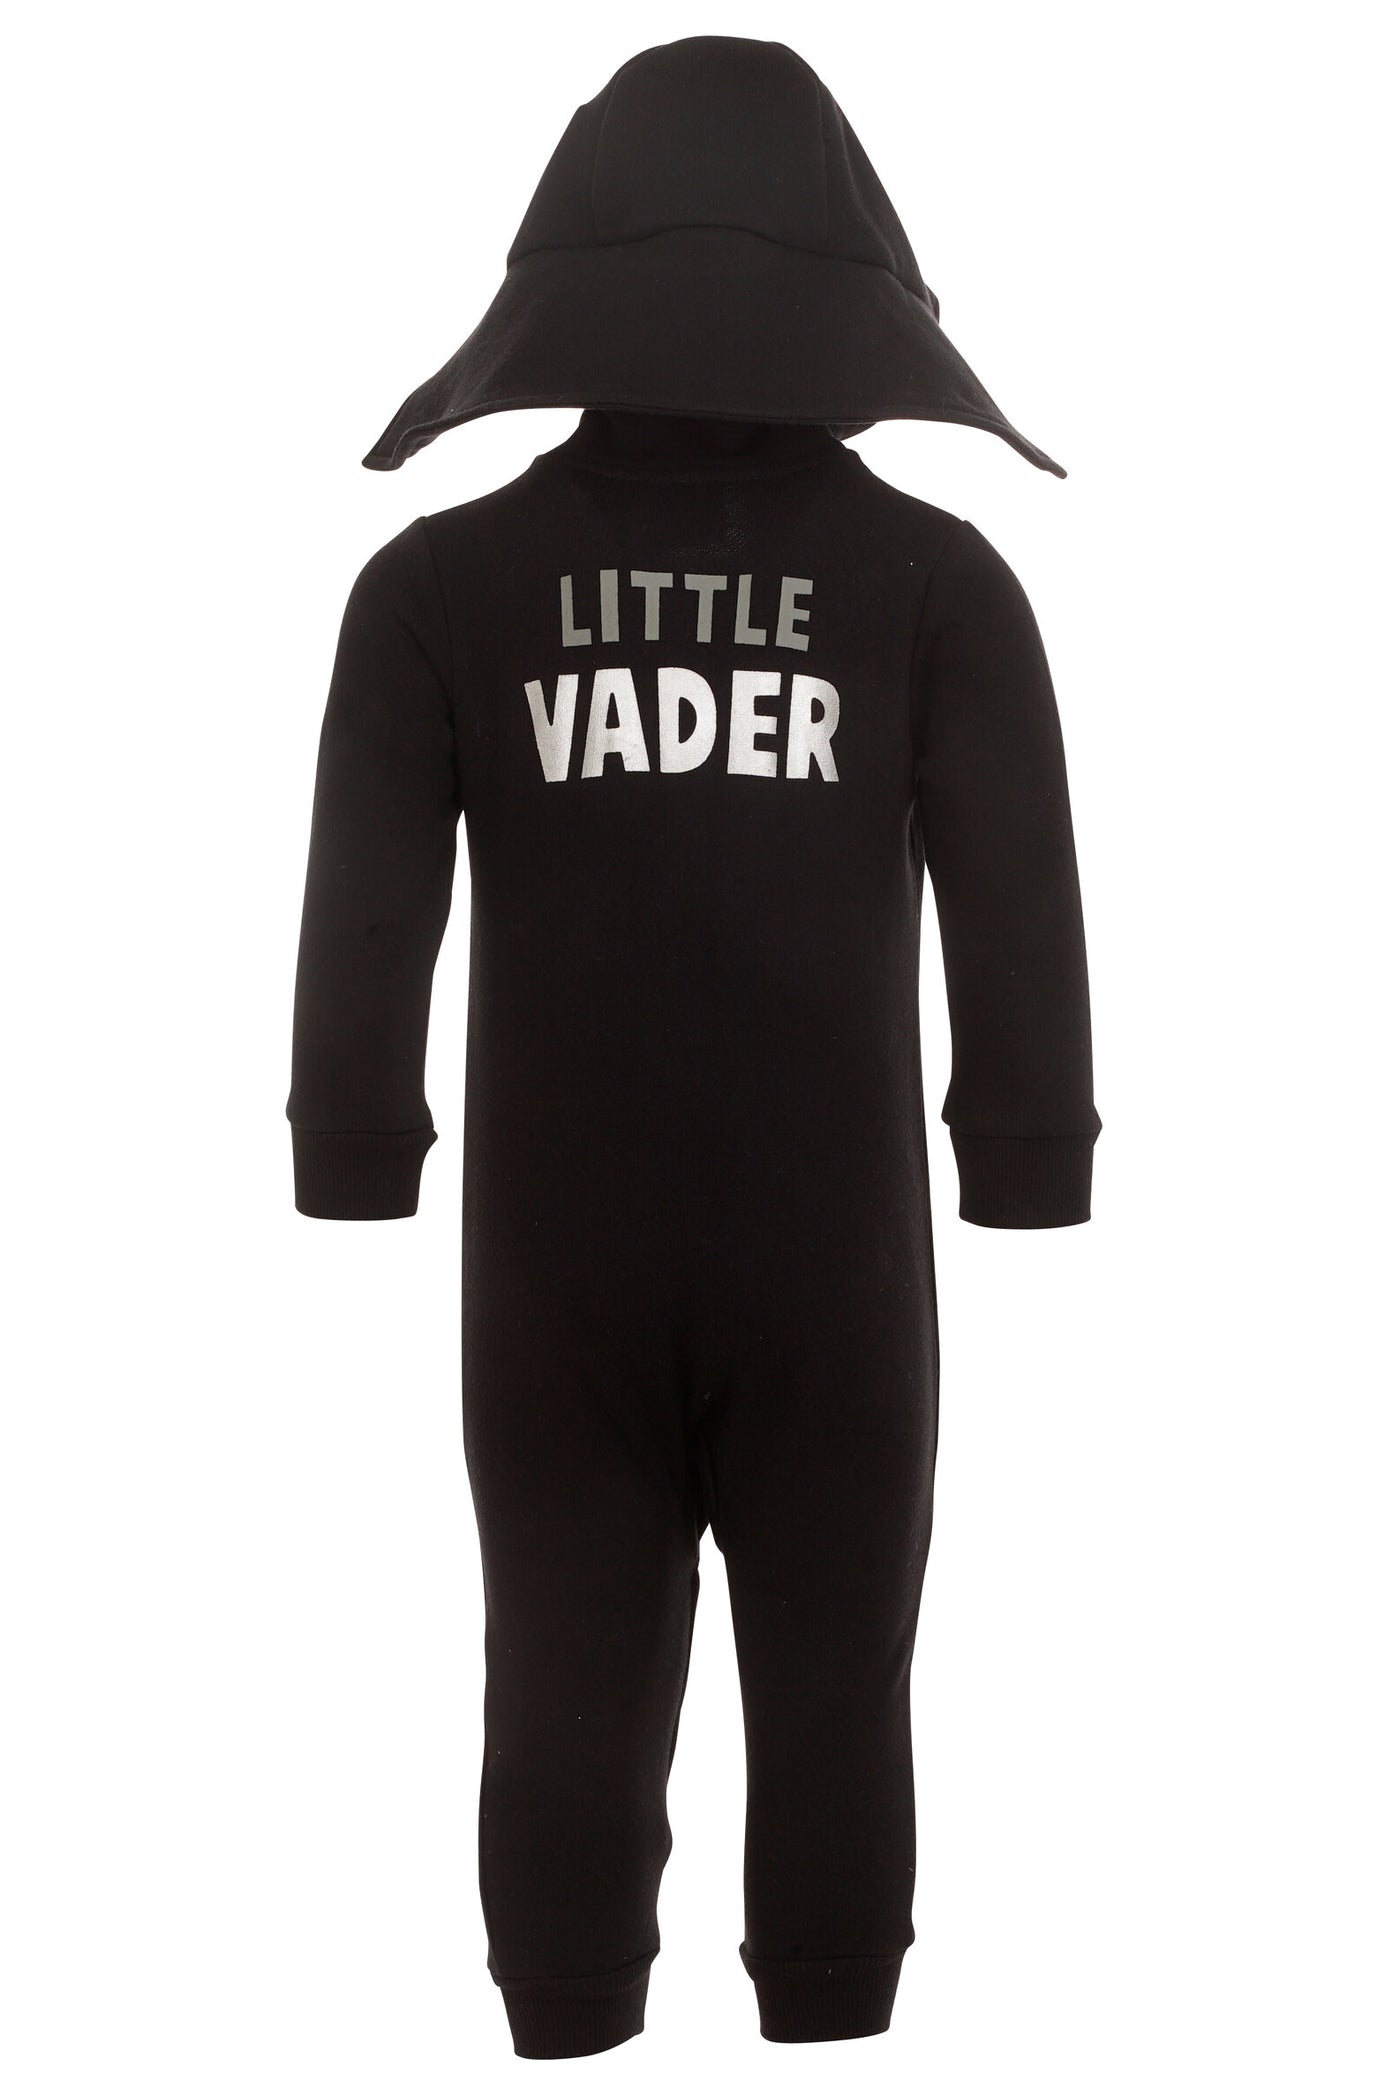 Star Wars Darth Vader Fleece Zip Up Cosplay Costume Coverall